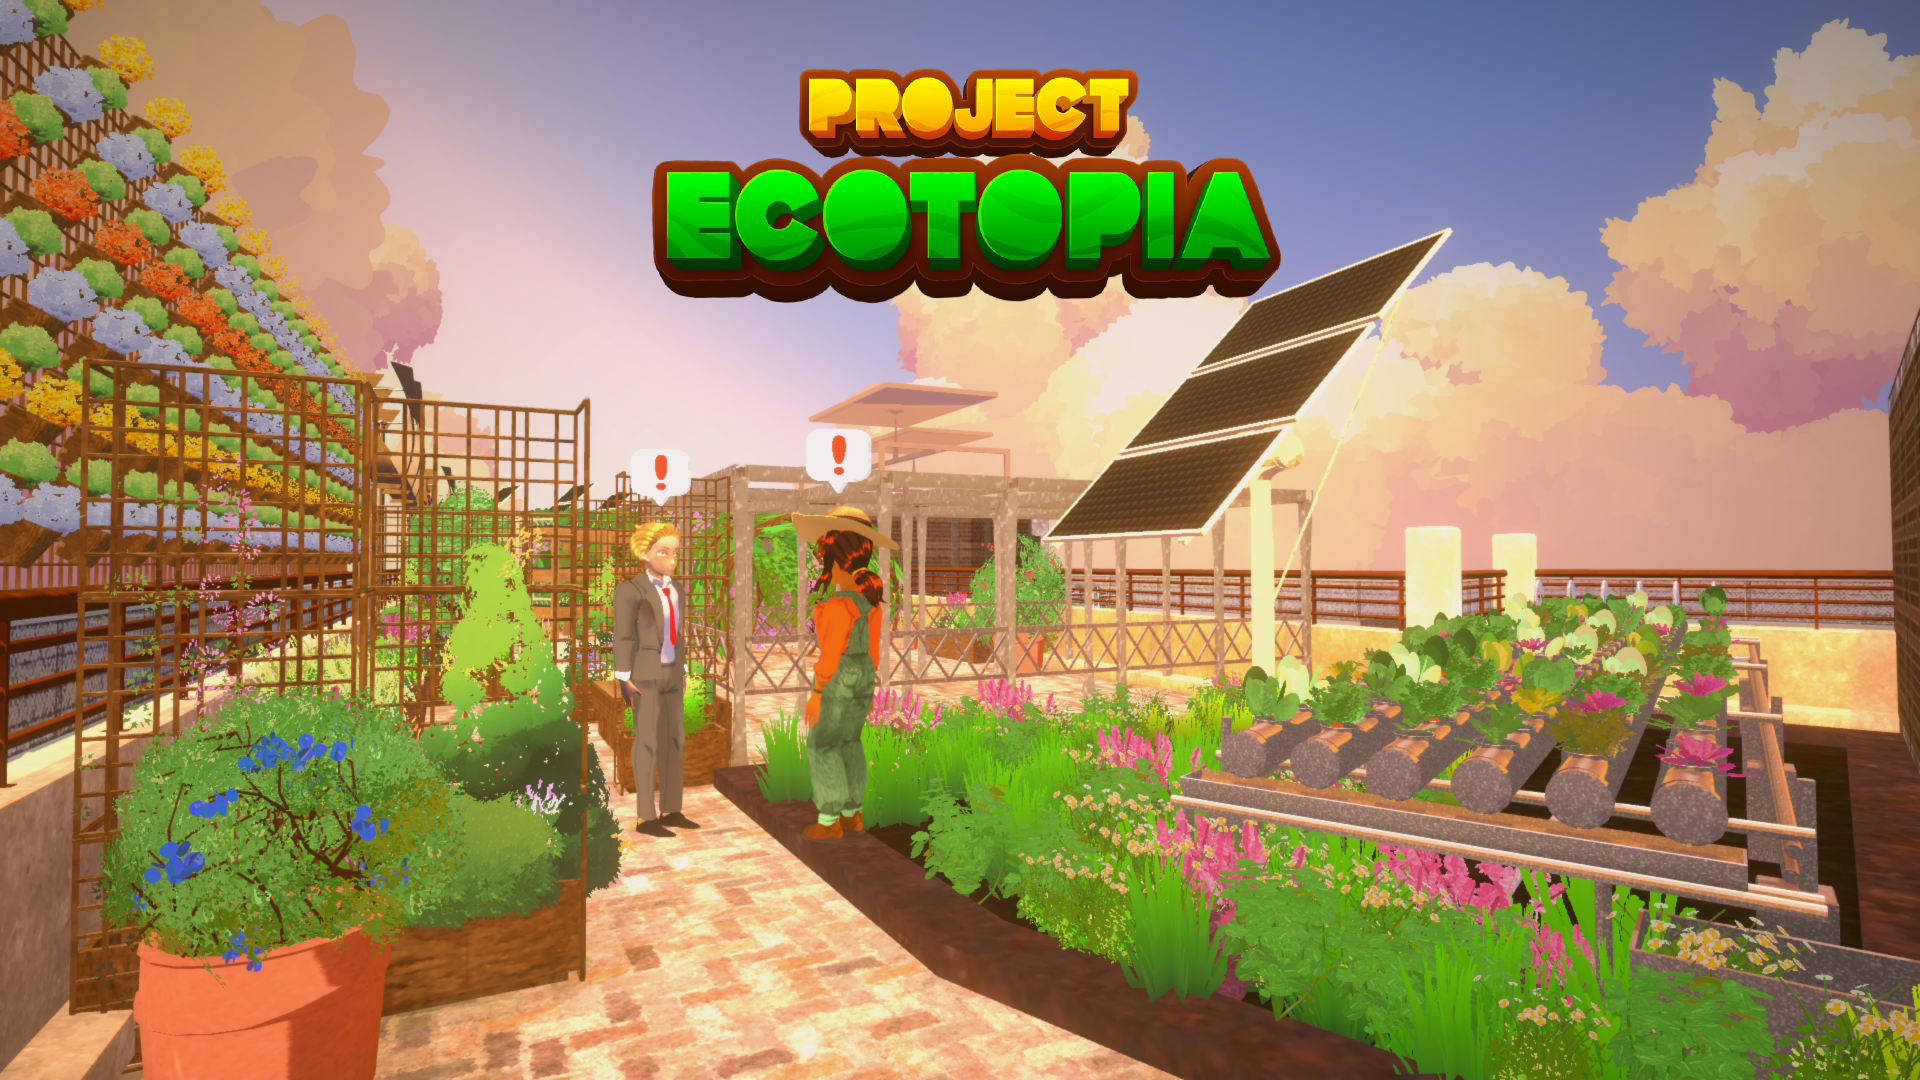 Project Ecotopia